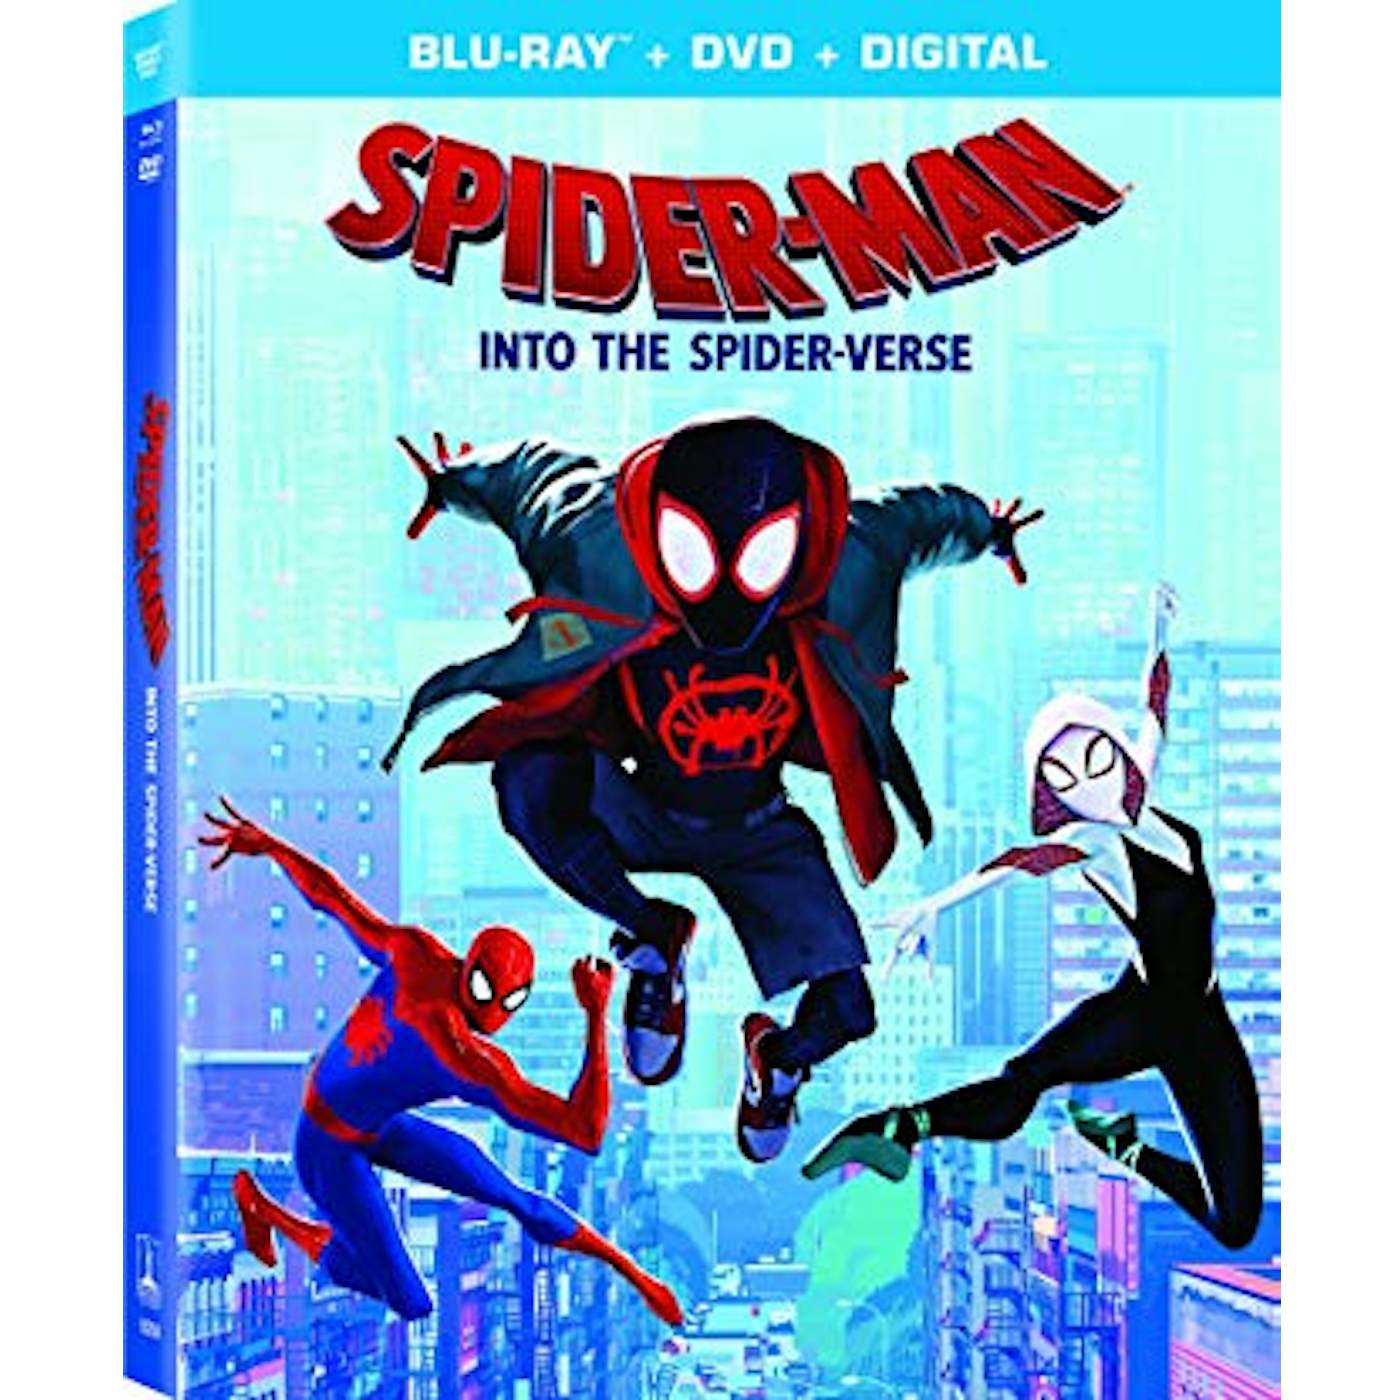 SPIDER-MAN: INTO THE SPIDER-VERSE Blu-ray